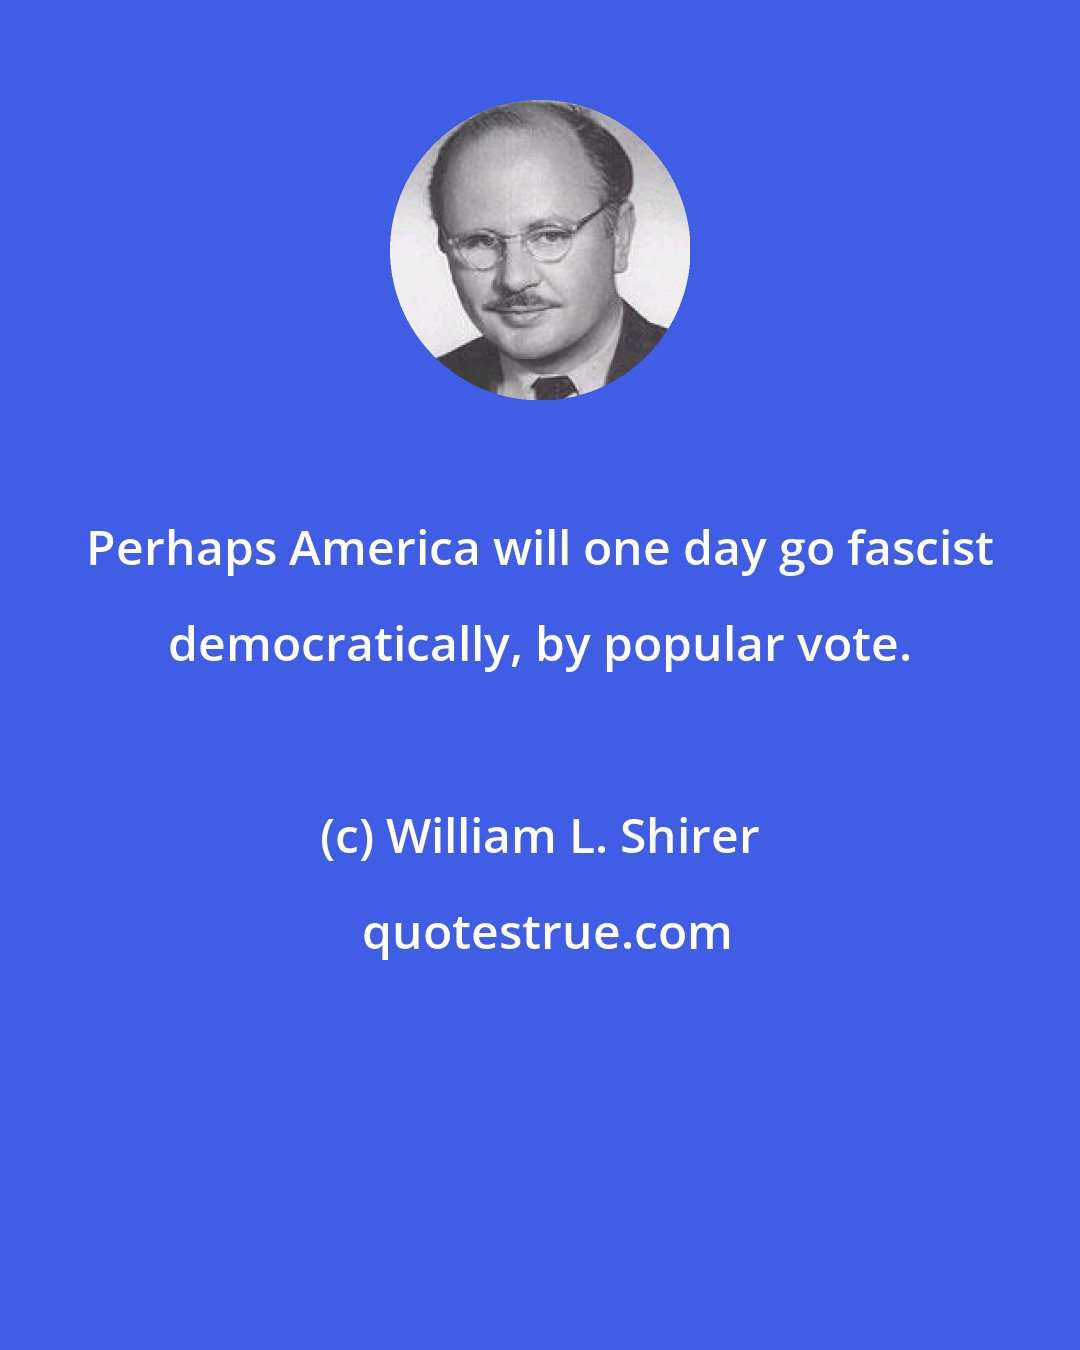 William L. Shirer: Perhaps America will one day go fascist democratically, by popular vote.